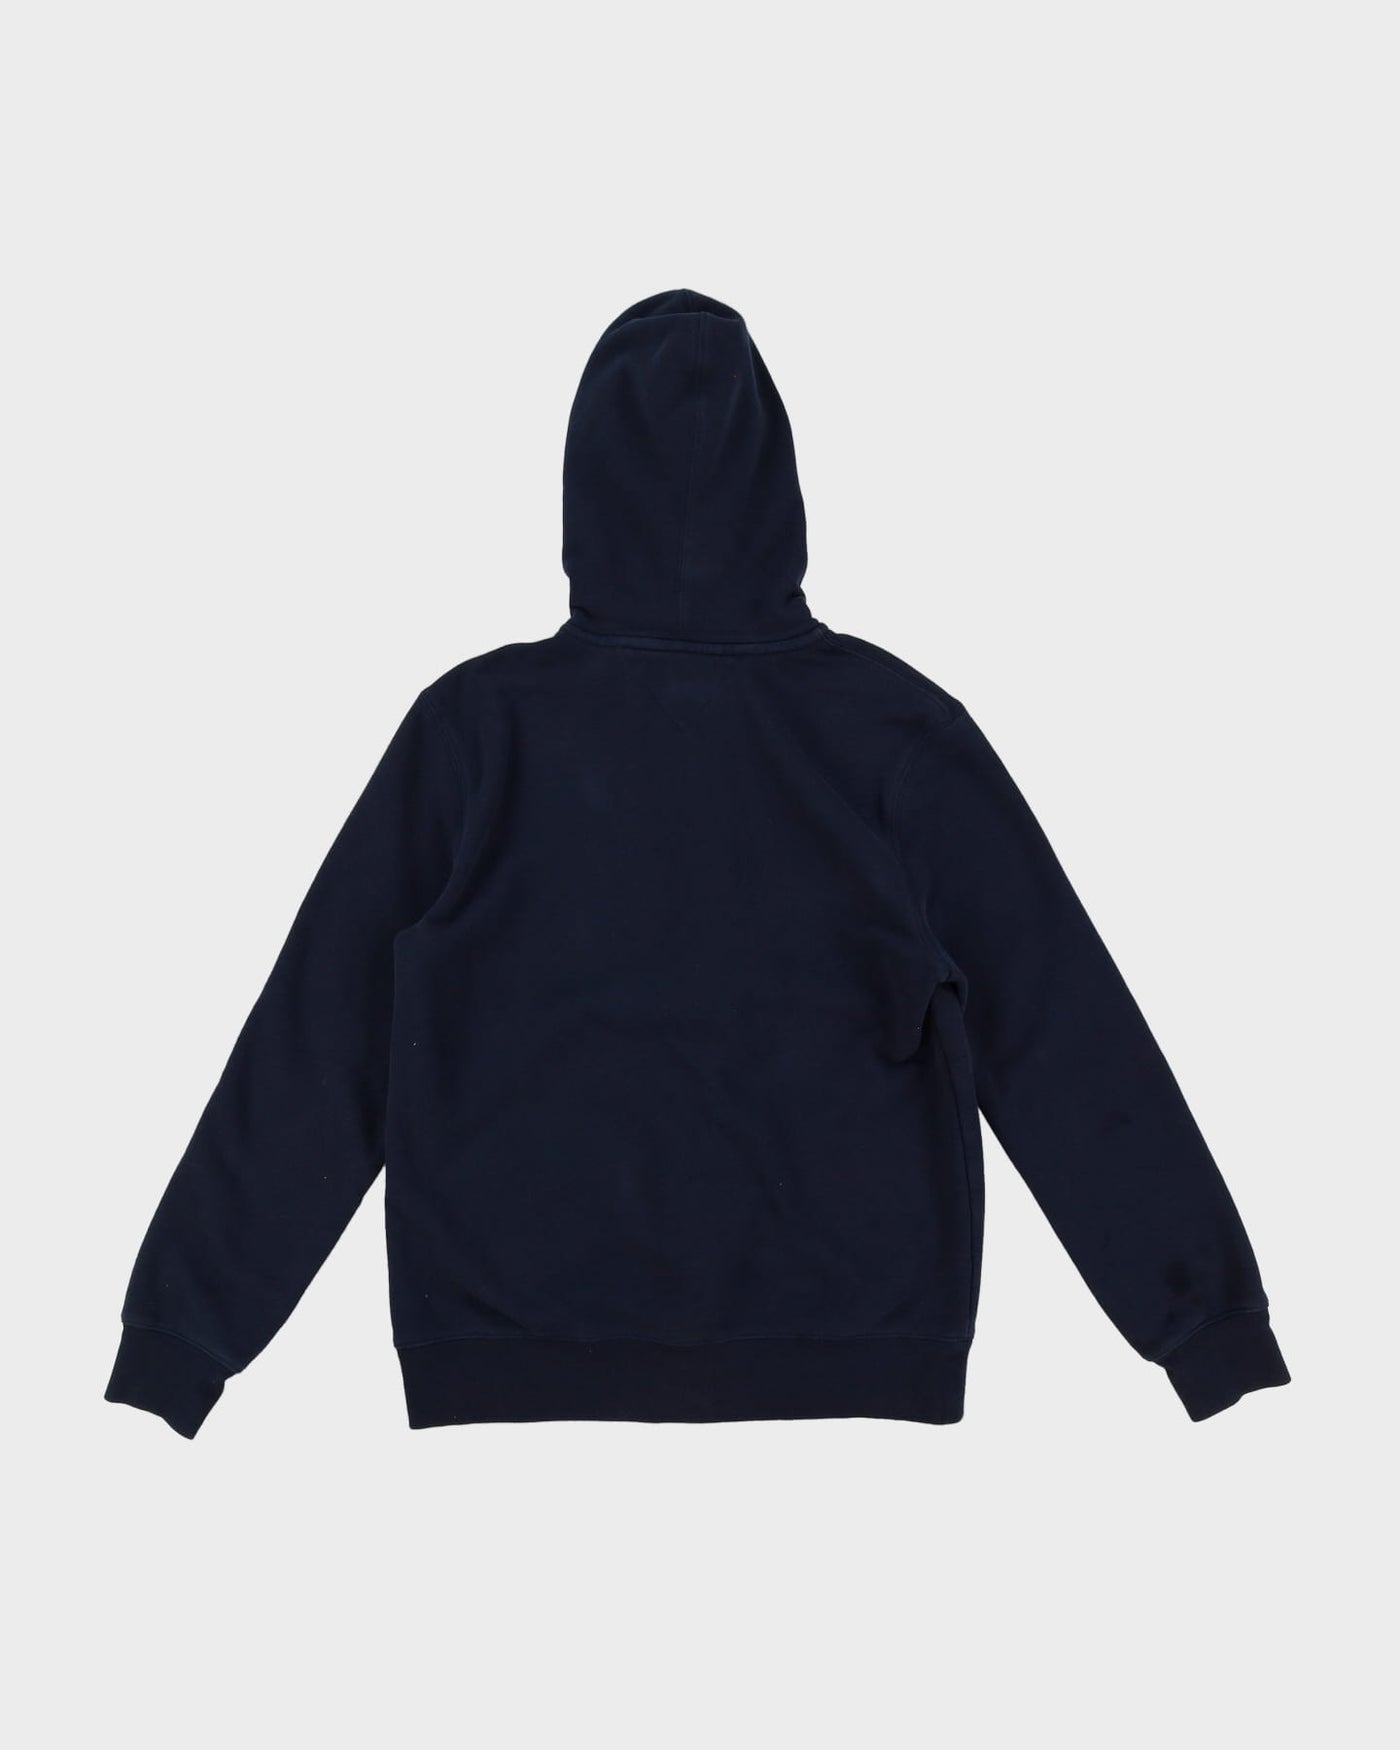 Tommy Hilfiger Navy Hooded Zip-Up Sweatshirt - M